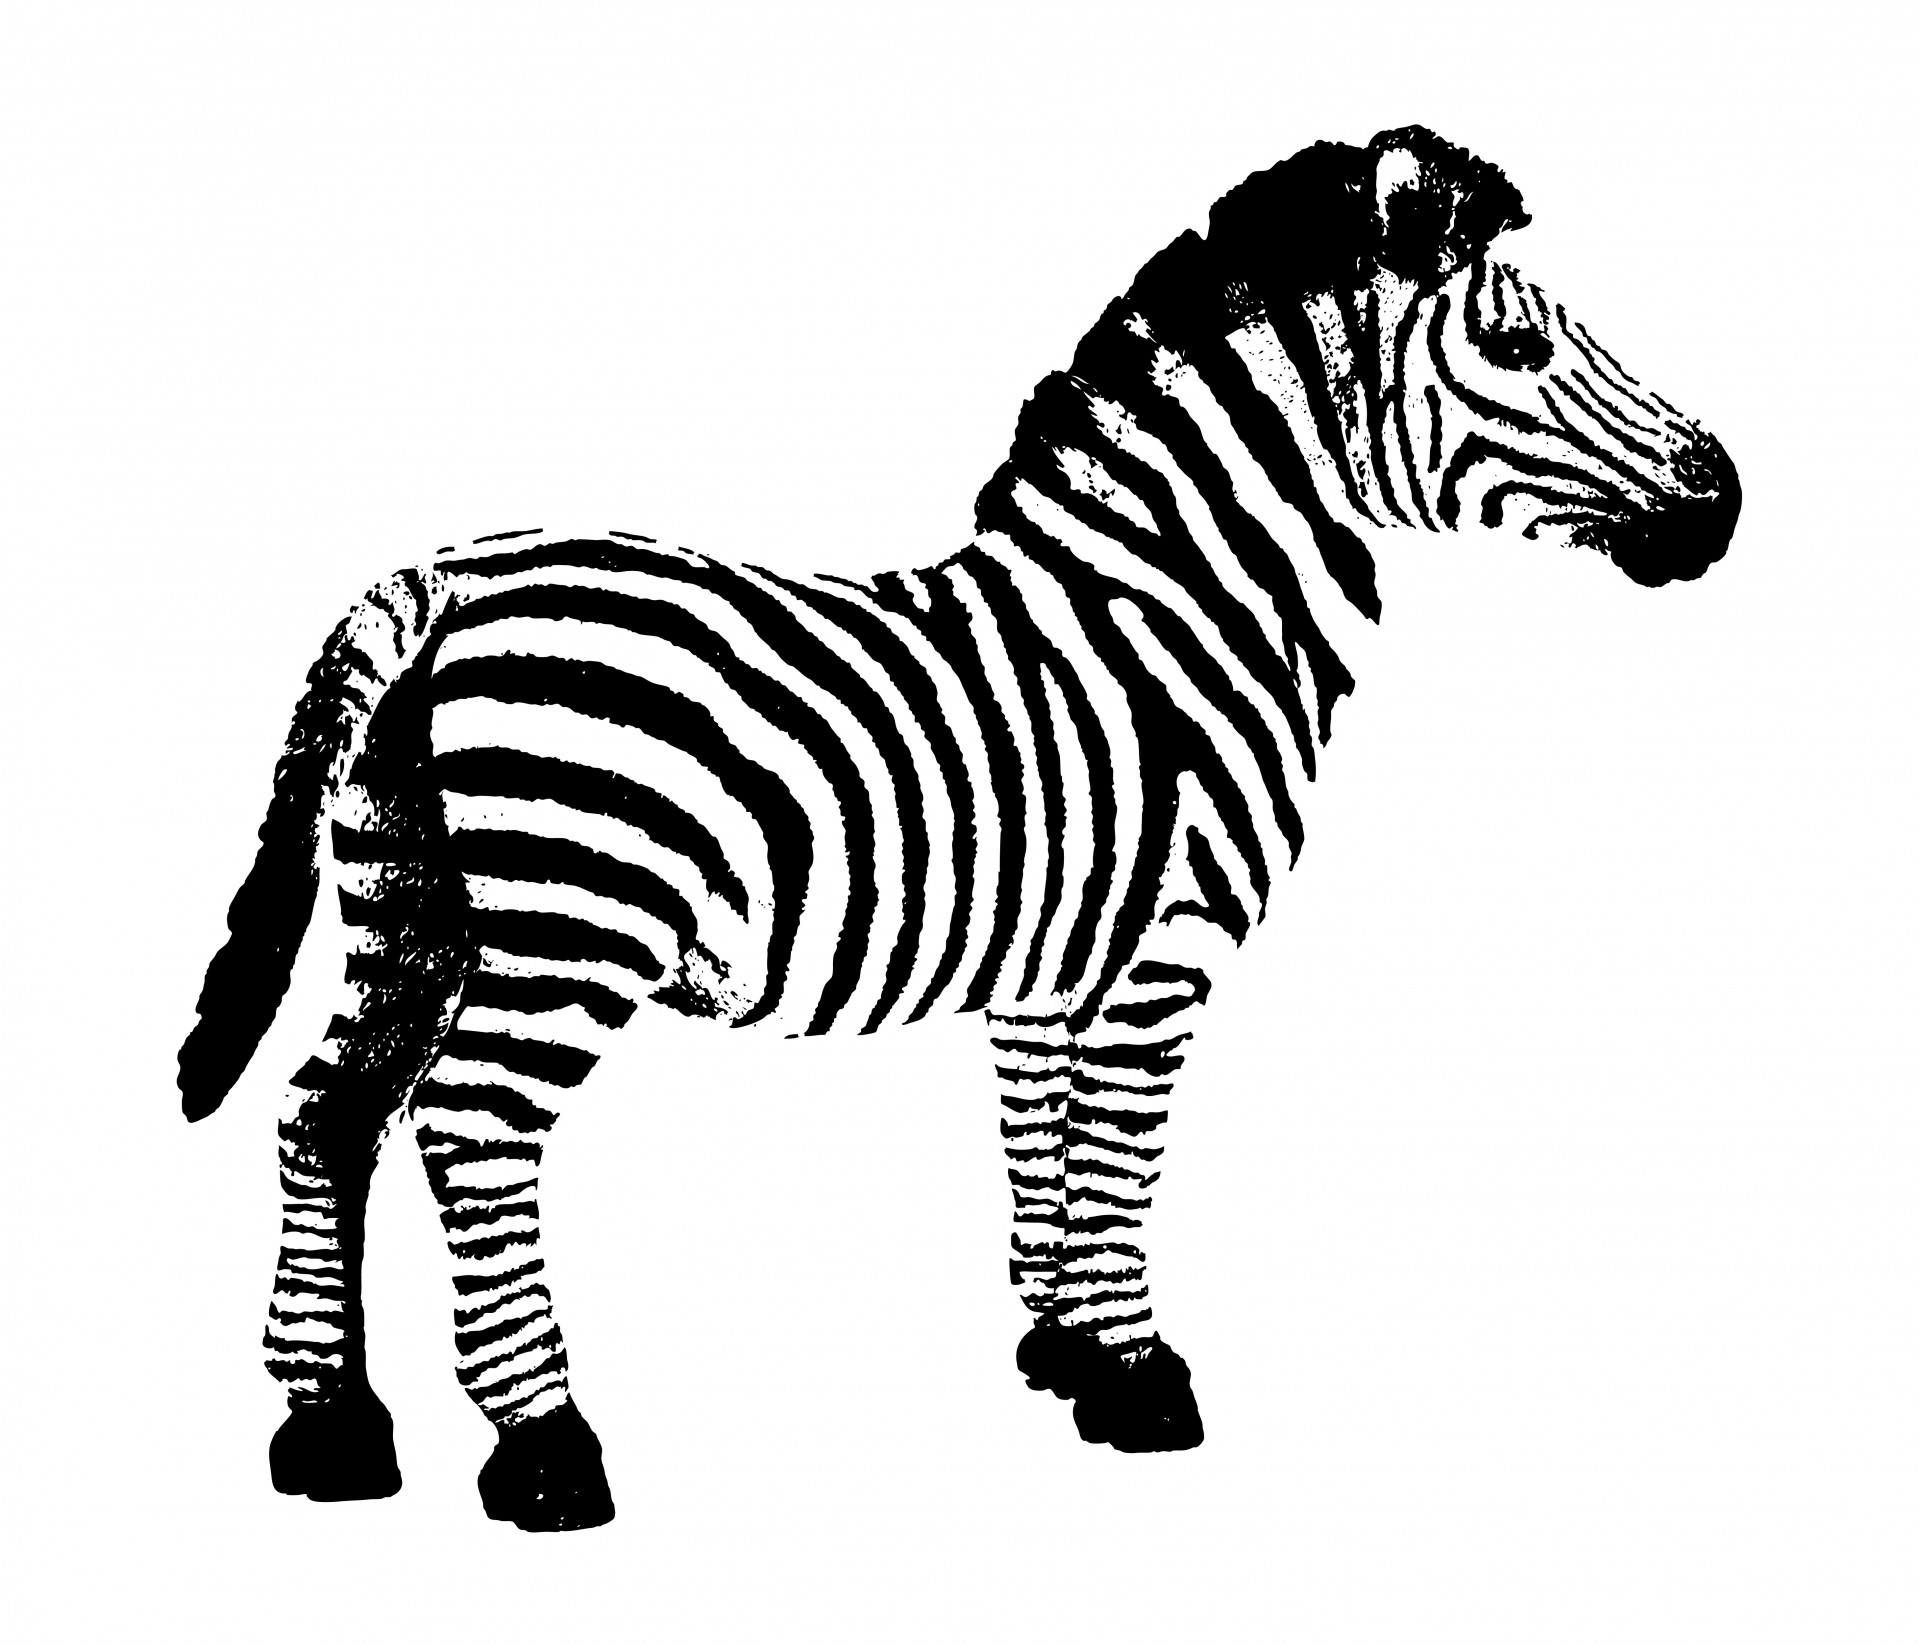 Zebra clip art free - Cliparting clipartall clipartall.com .